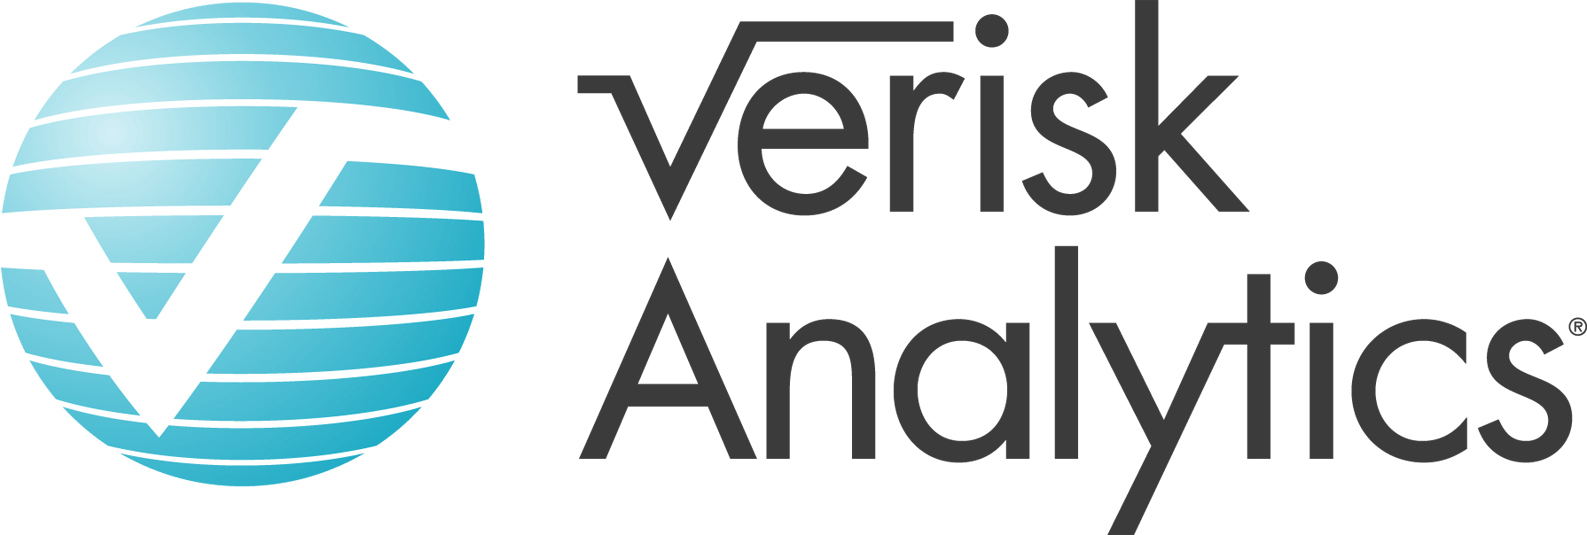 Verisk Analytics Inc